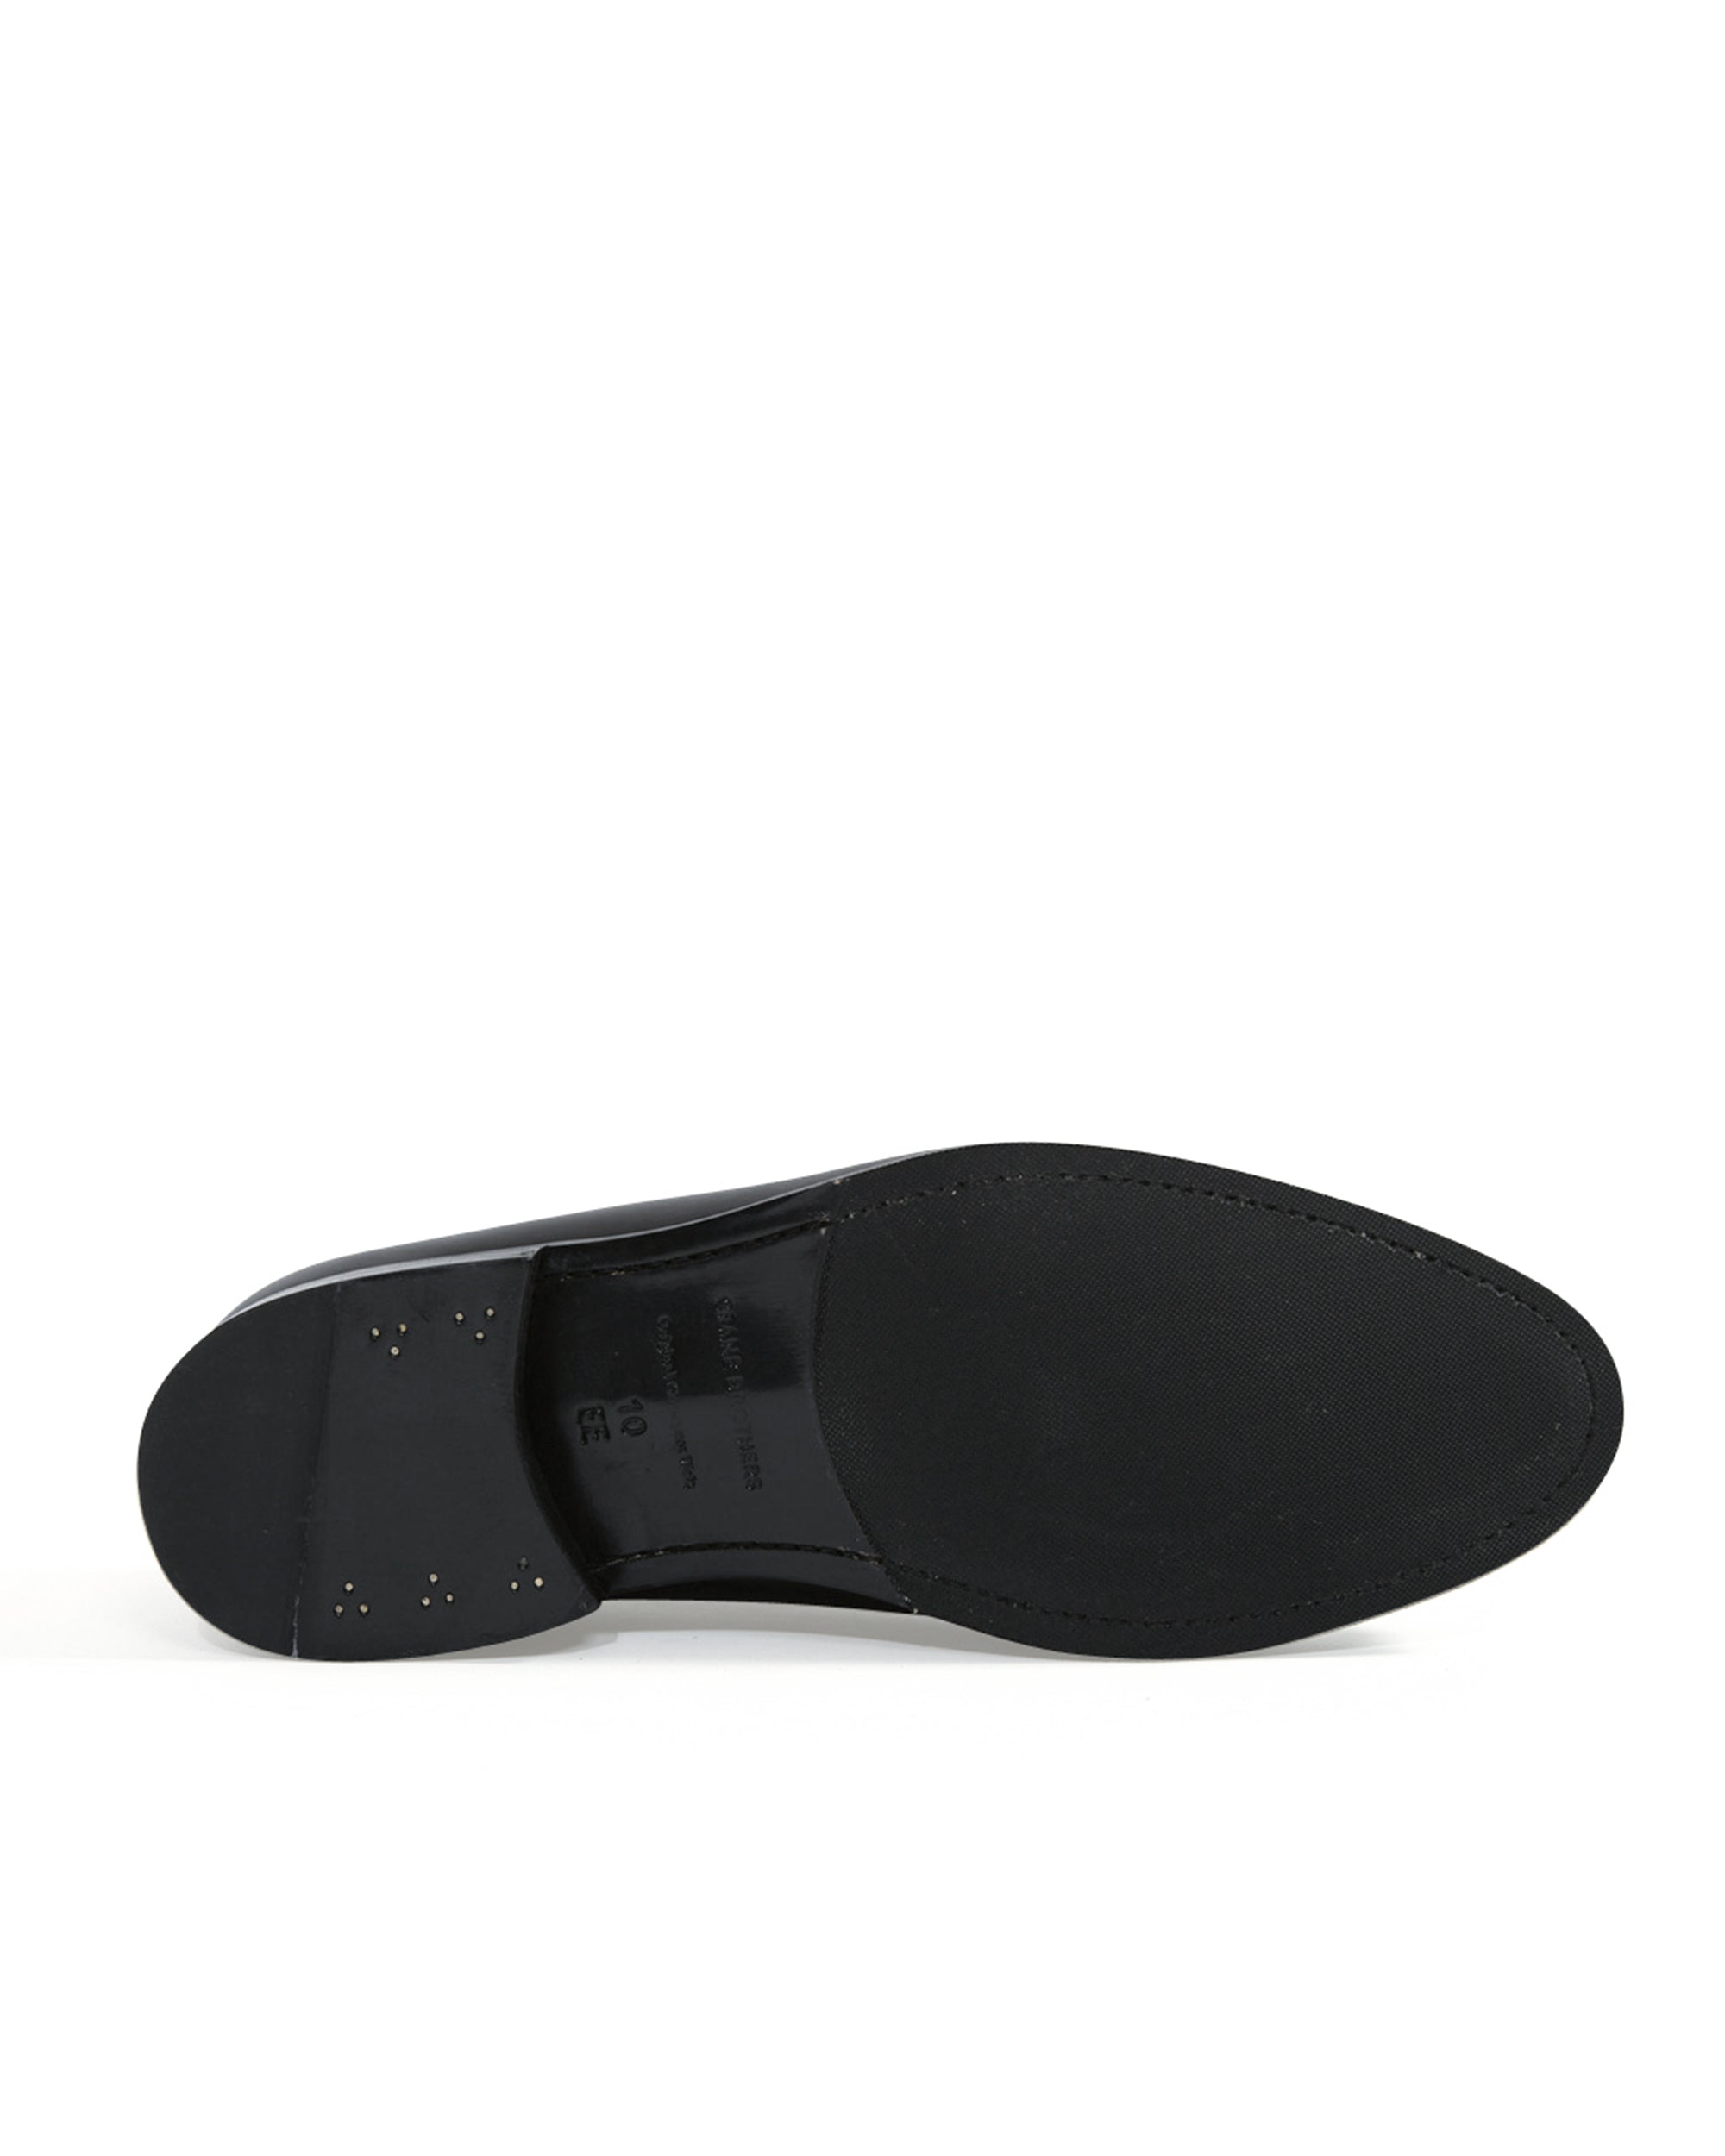 Black Leather Whole Cut Oxford Shoe